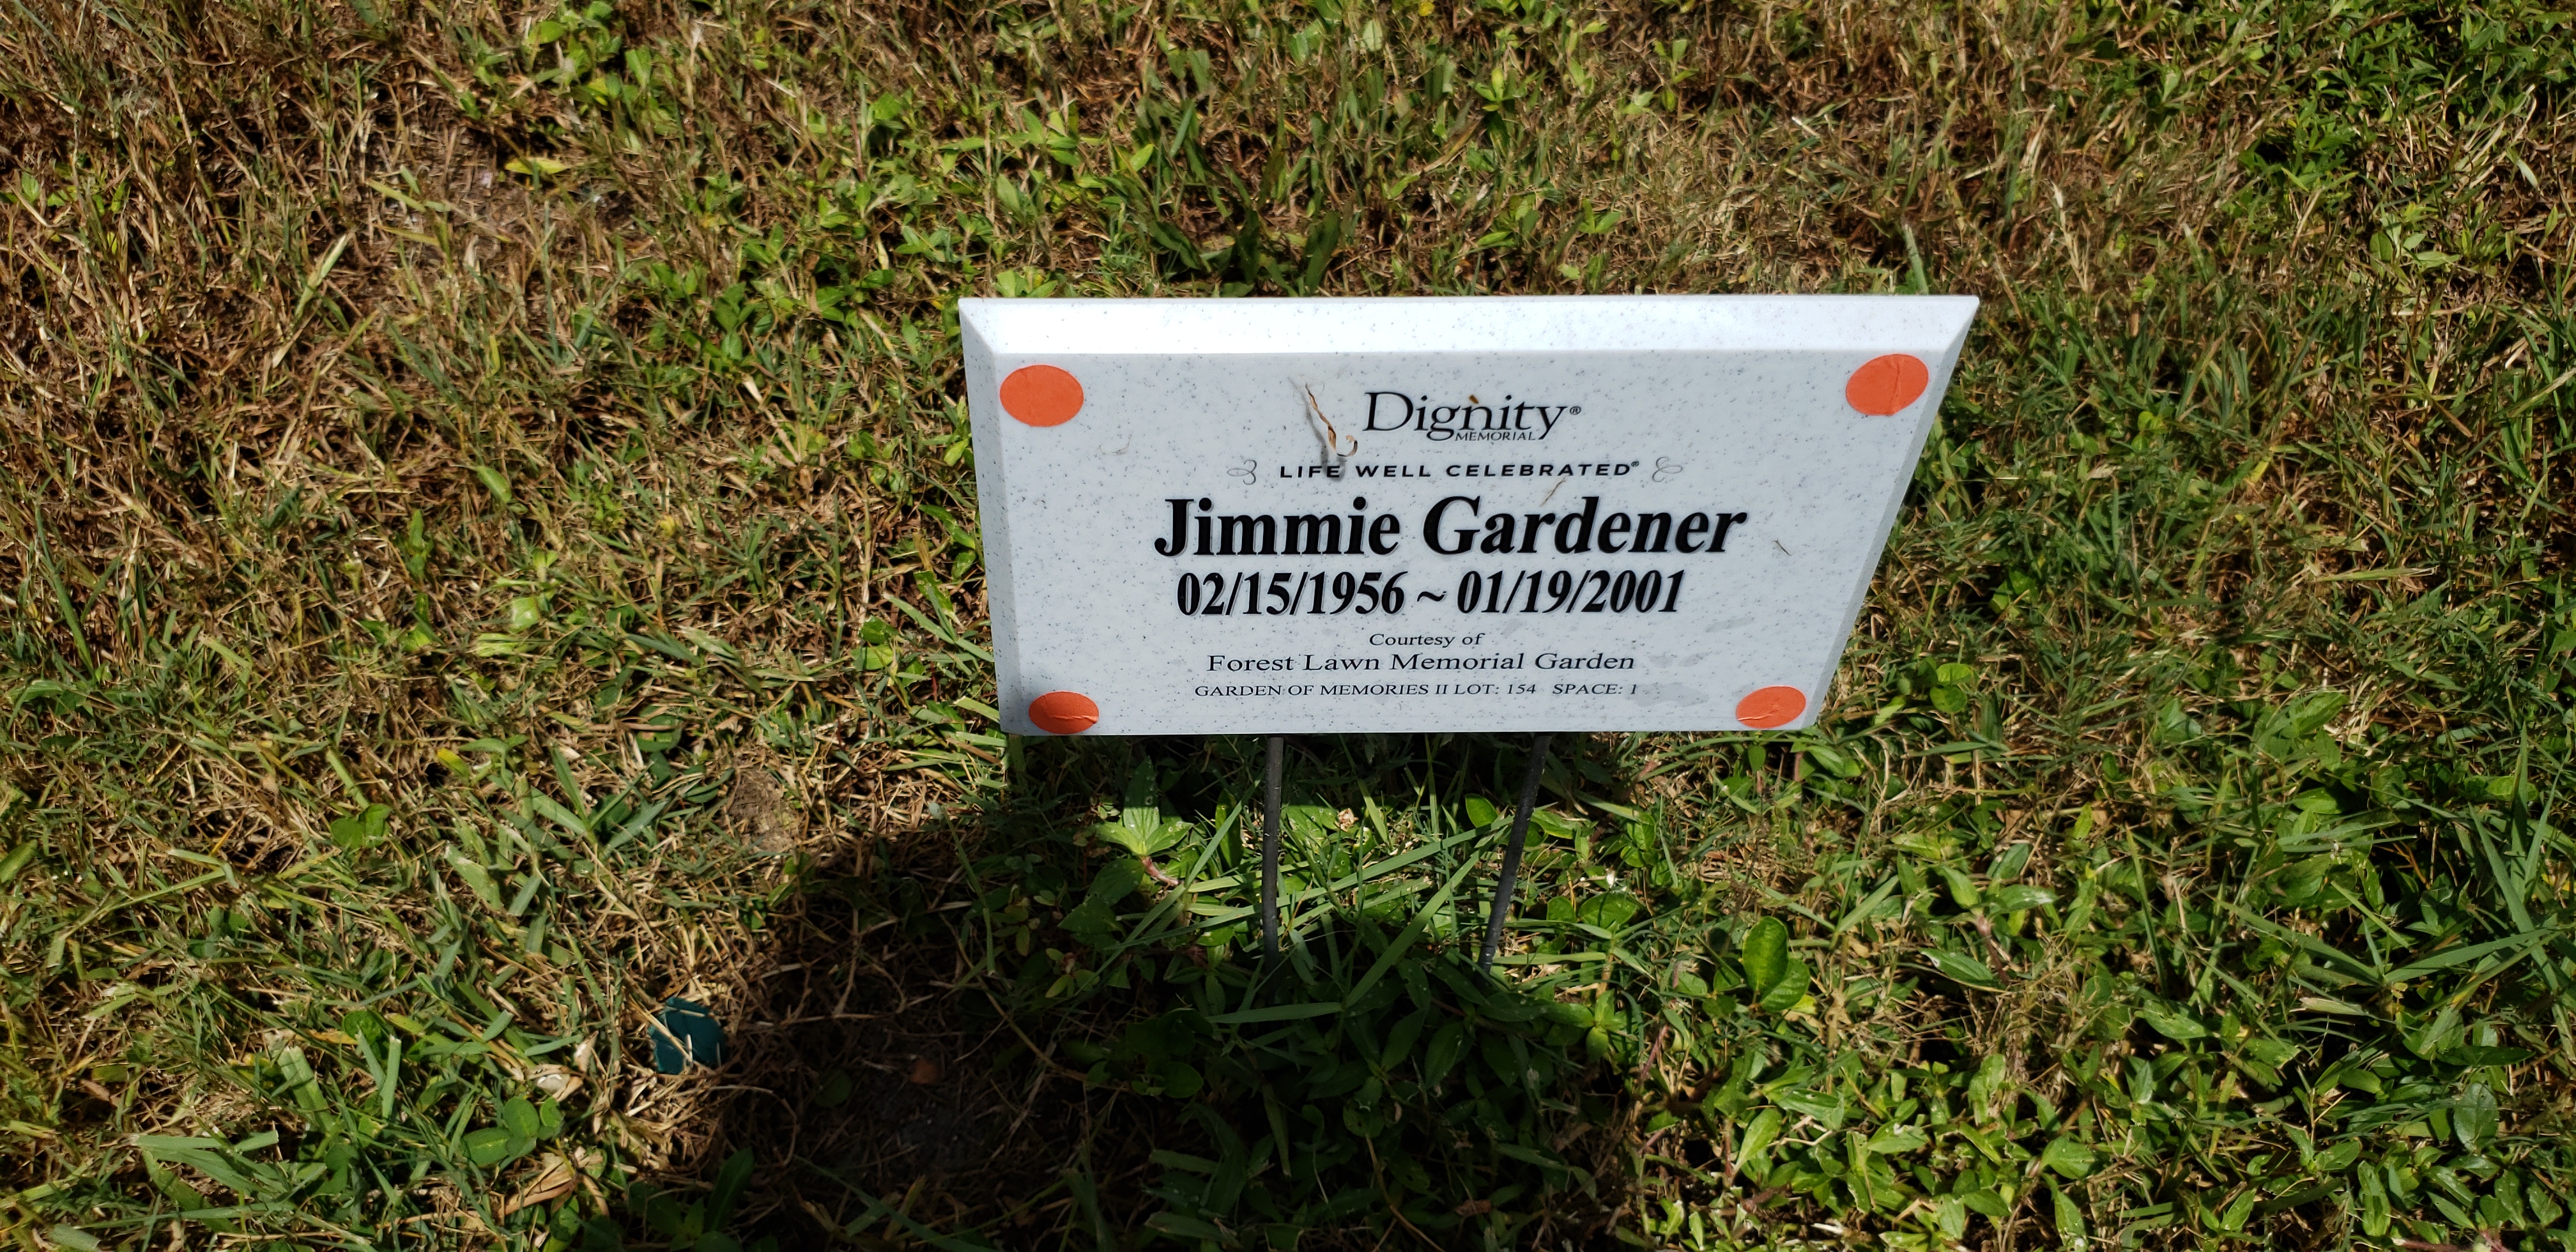 Jimmie Gardener